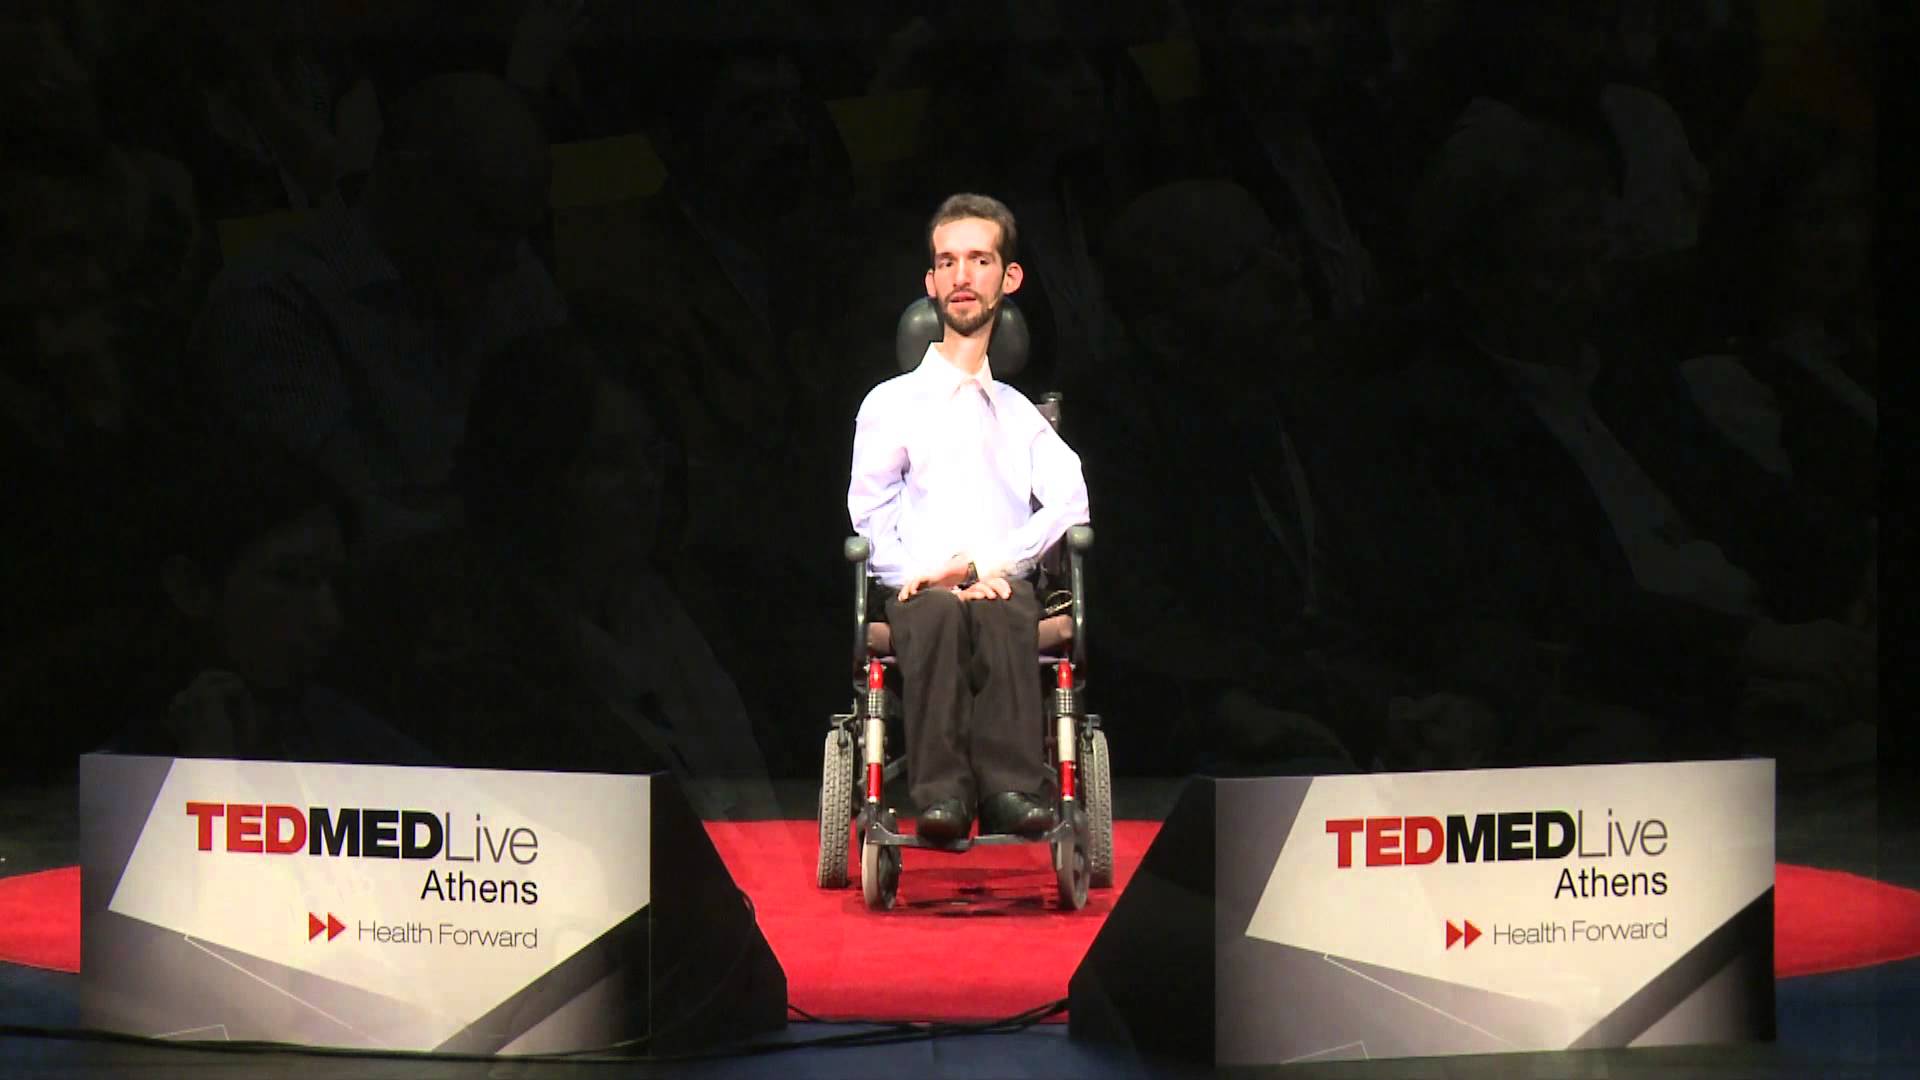 tilestwra.com | Στέλιος Κυμπουρόπουλος: Είμαι ένας νέος επιστήμονας με βαριά κινητική αναπηρία